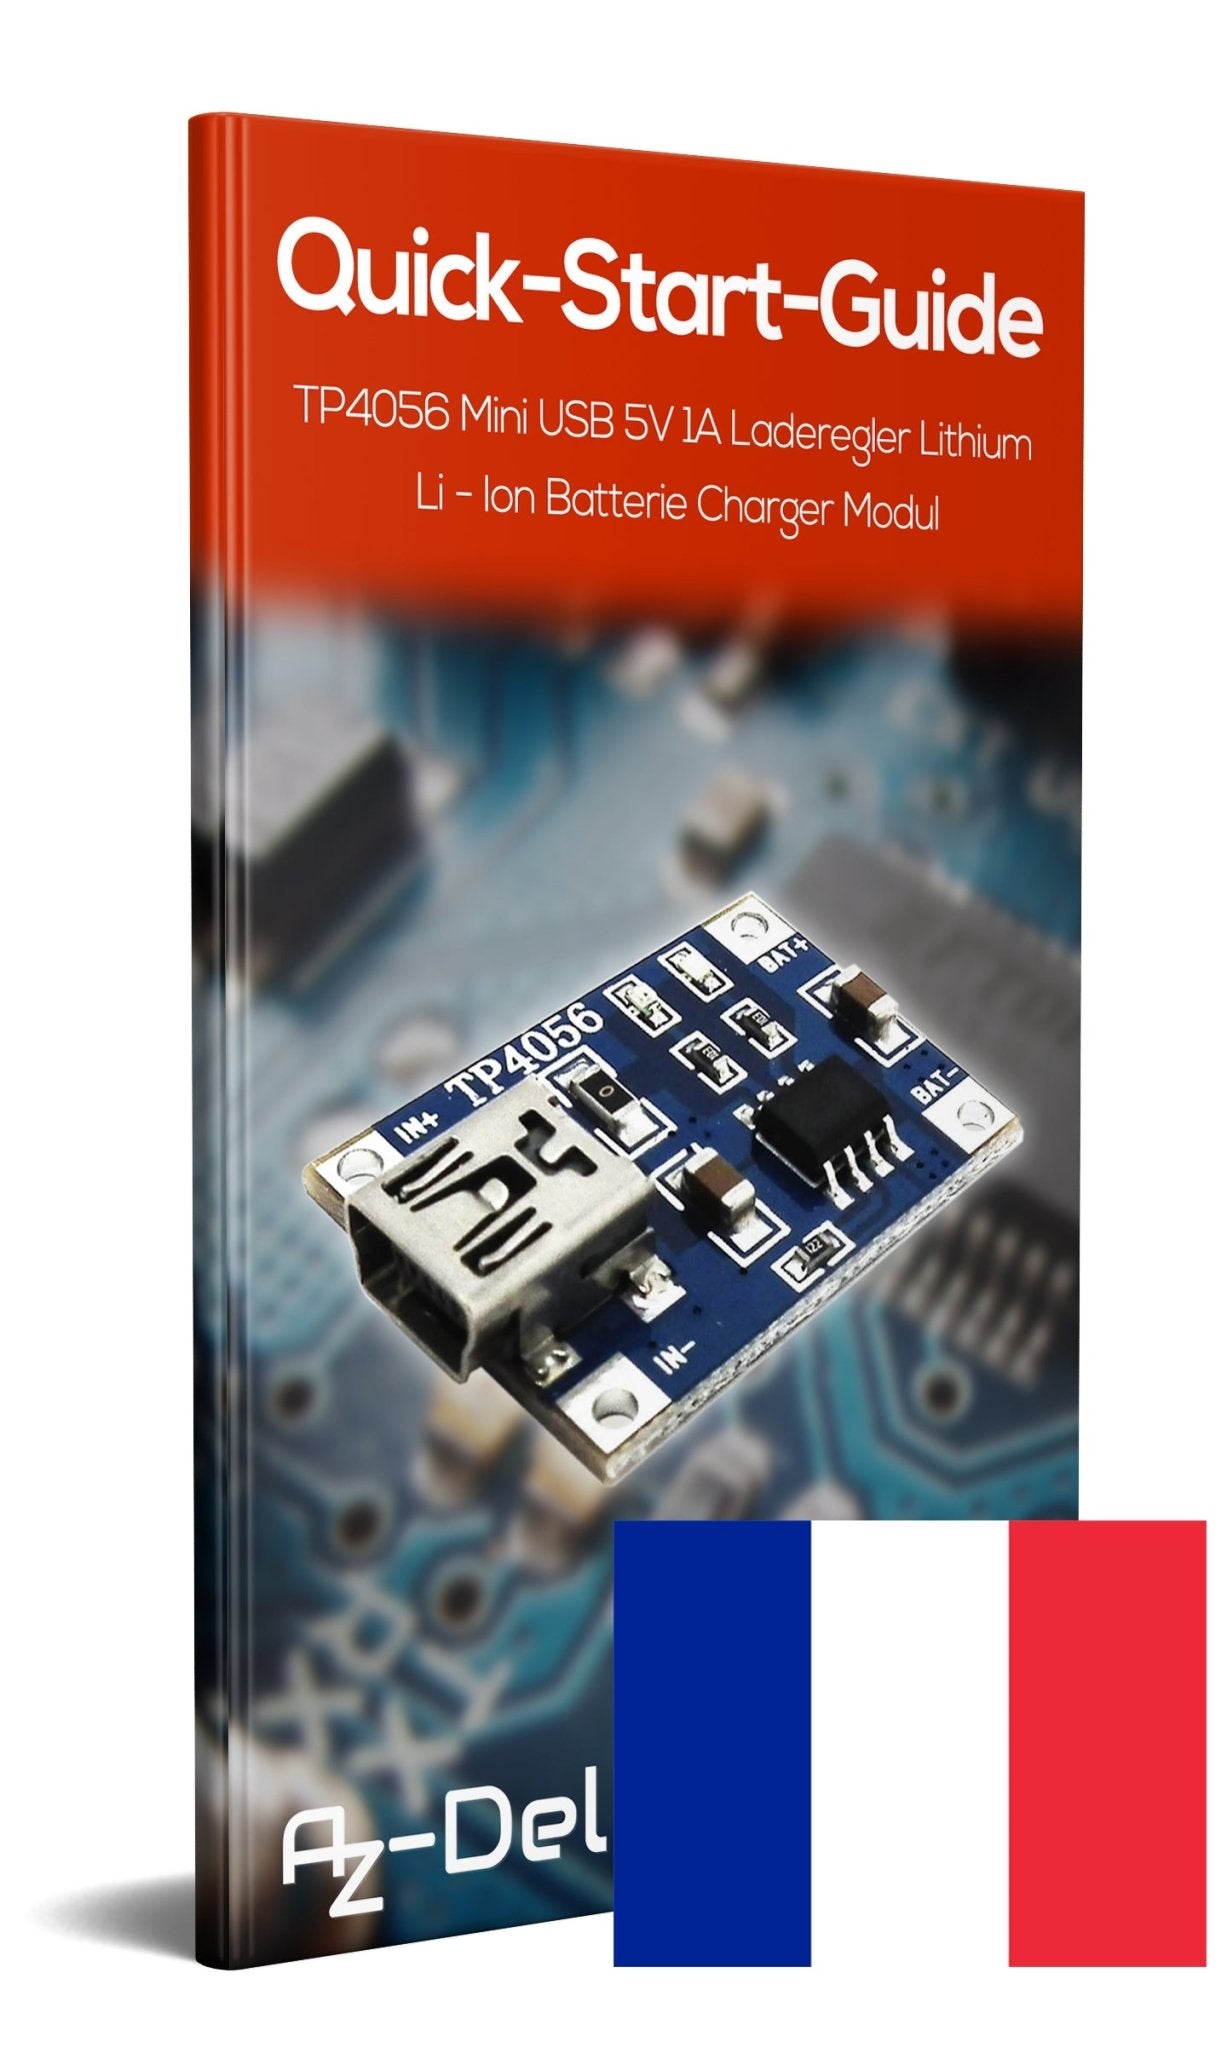 TP4056 Mini USB 5V 1A Laderegler Lithium Li - Ion Batterie Charger Modul - AZ-Delivery